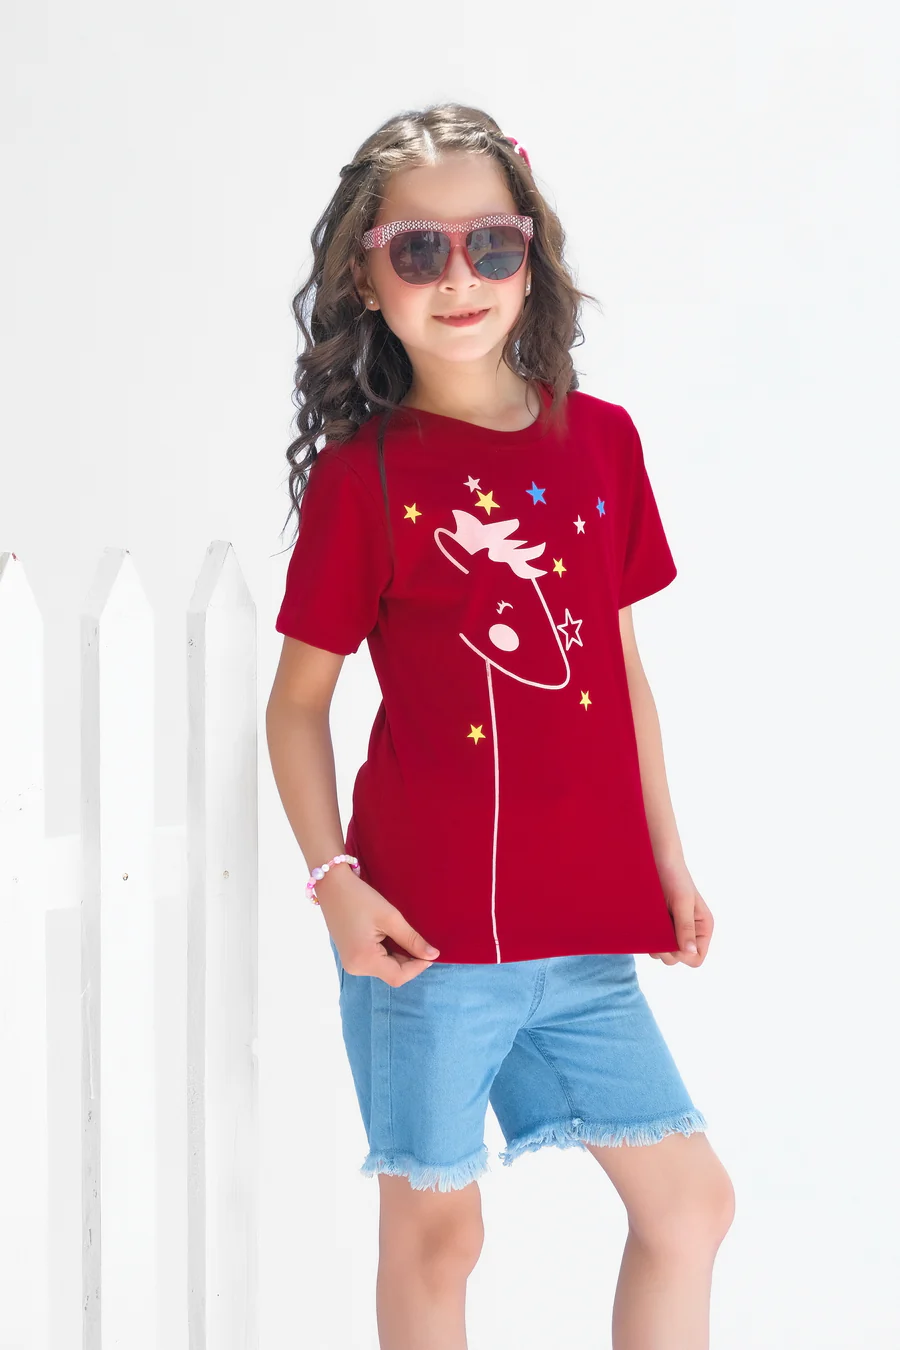 Star - Half Sleeves T-Shirts For Kids - Maroon - SBT-354